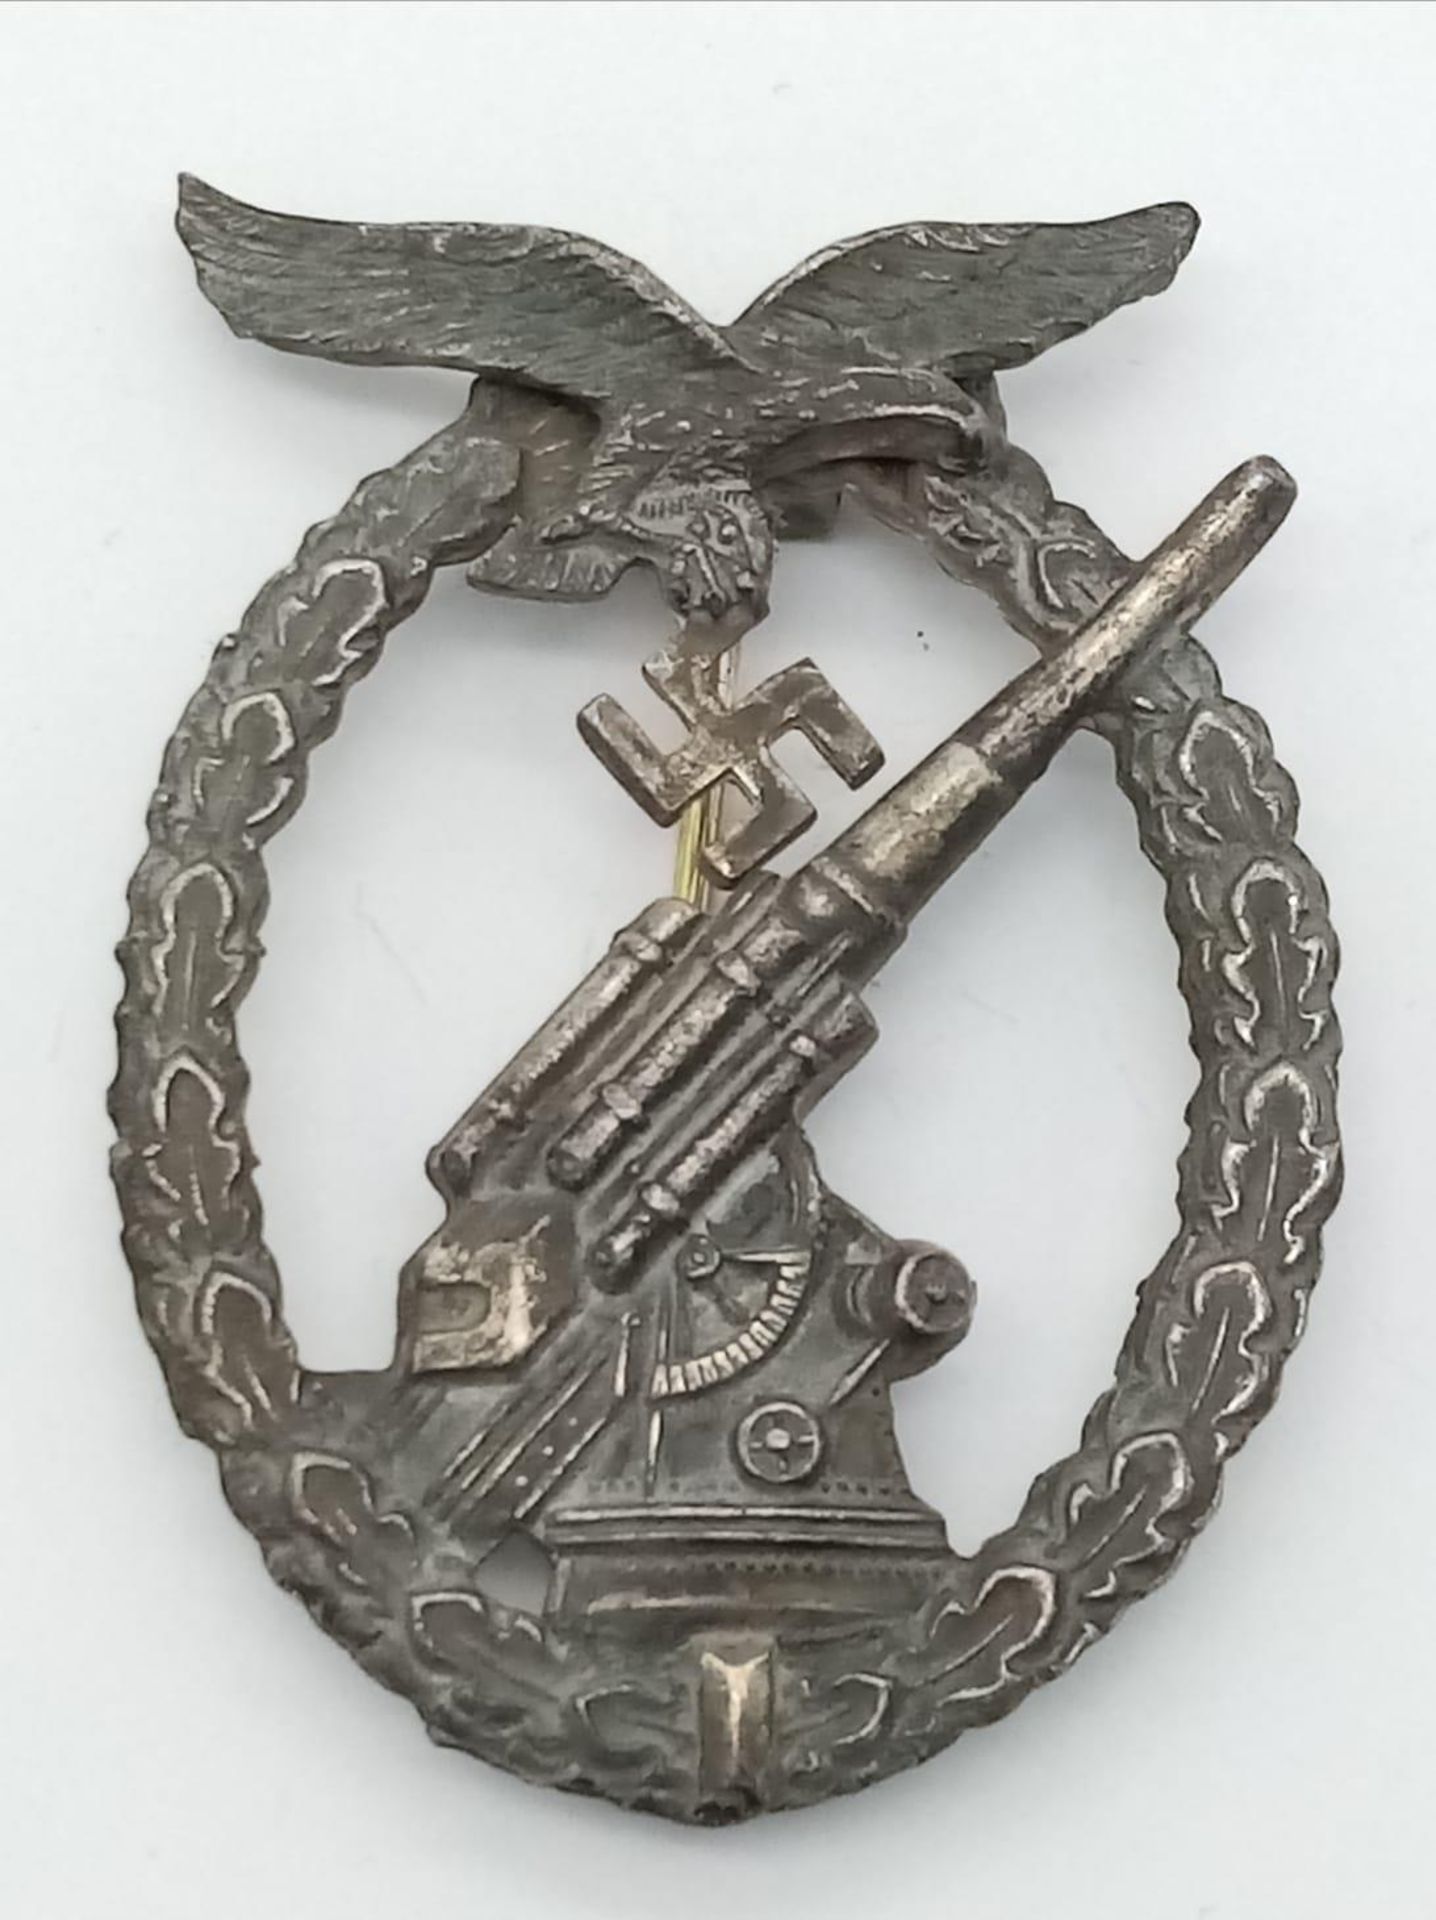 3rd Reich Luftwaffe Flakbzeichen Flak (Anti Aircraft) Badge. Maker Marked “43” for the Maker